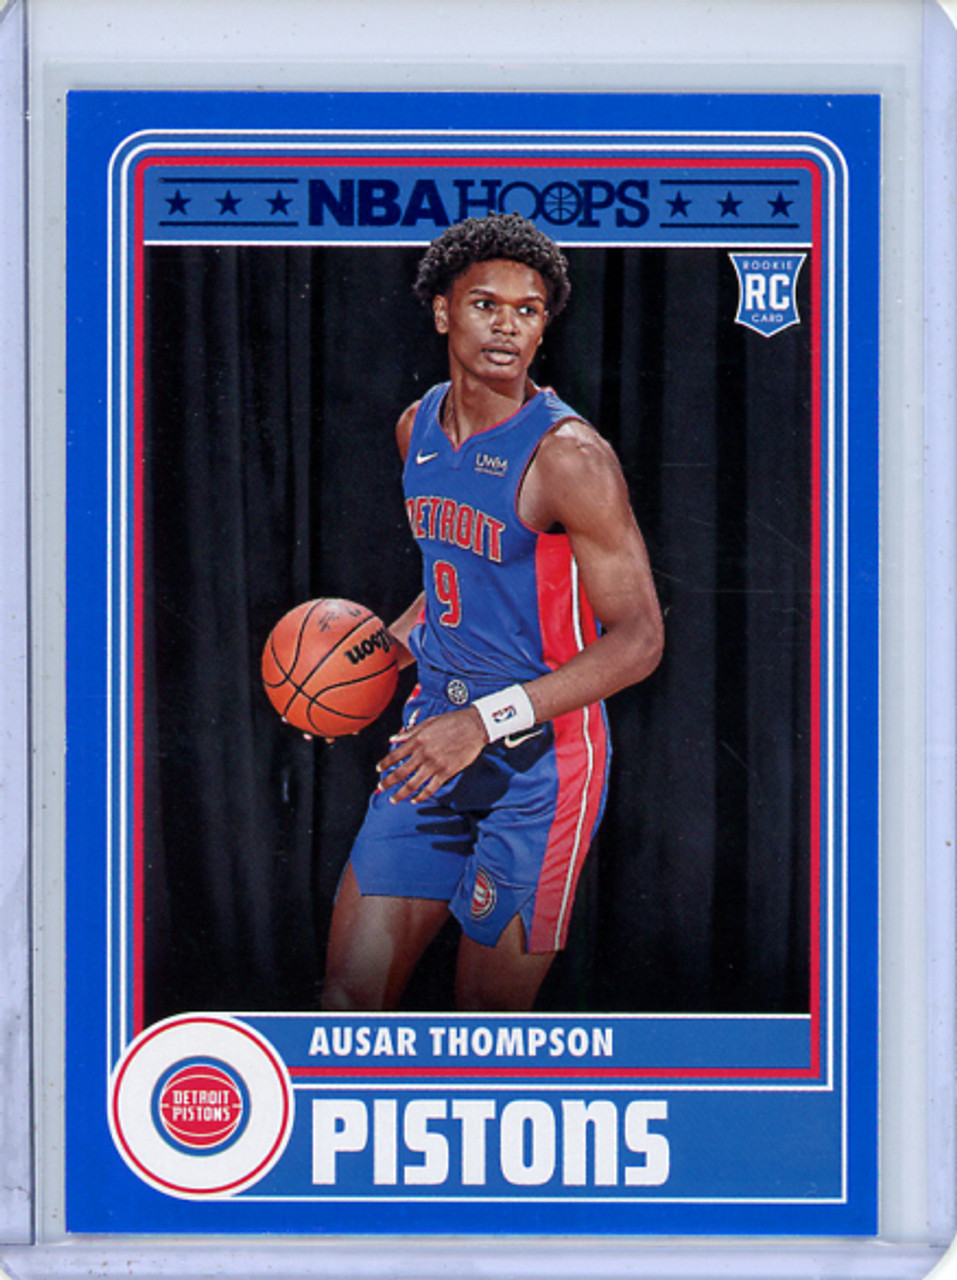 Ausar Thompson 2023-24 Hoops #293 Tribute Blue (CQ)